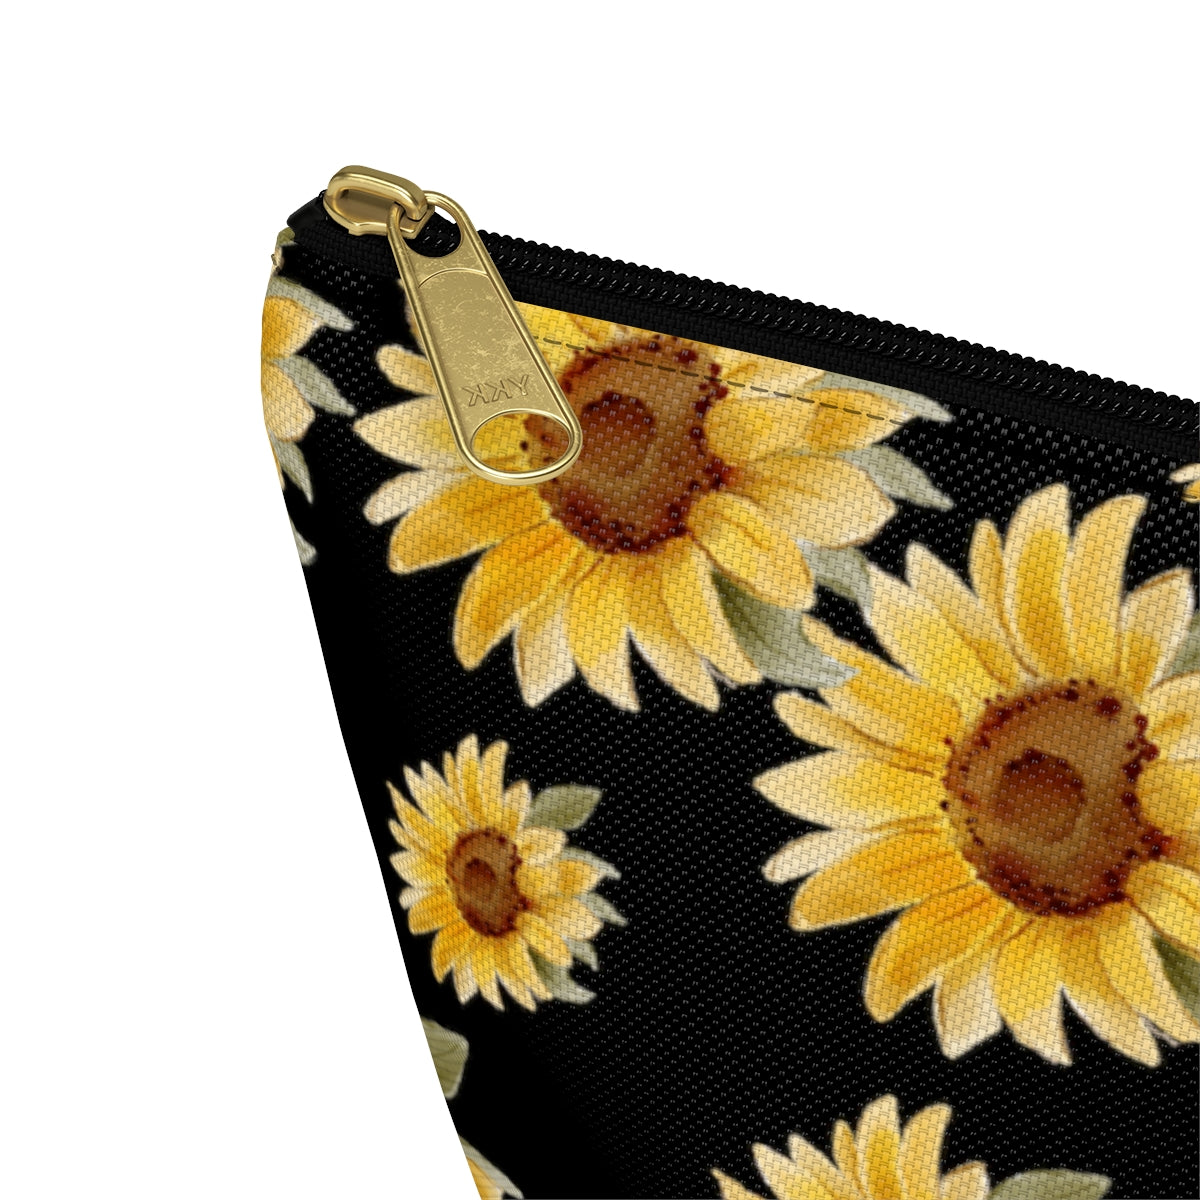 Sunflower Makeup Bag / Floral Cosmetic Bag / Watercolor Sunflower